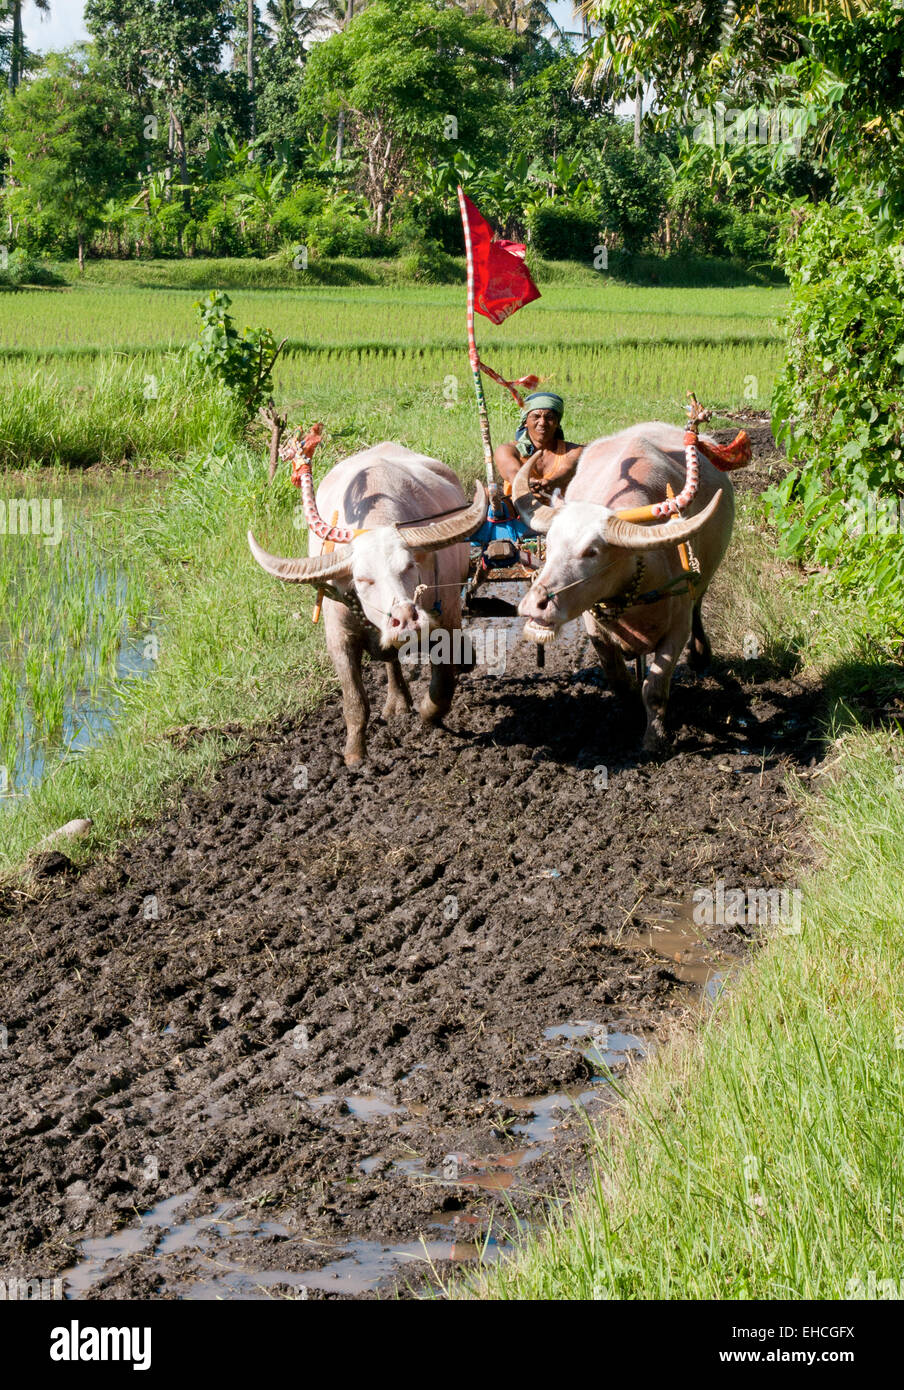 Water buffalo racing in the rice paddies of Bali. Stock Photo